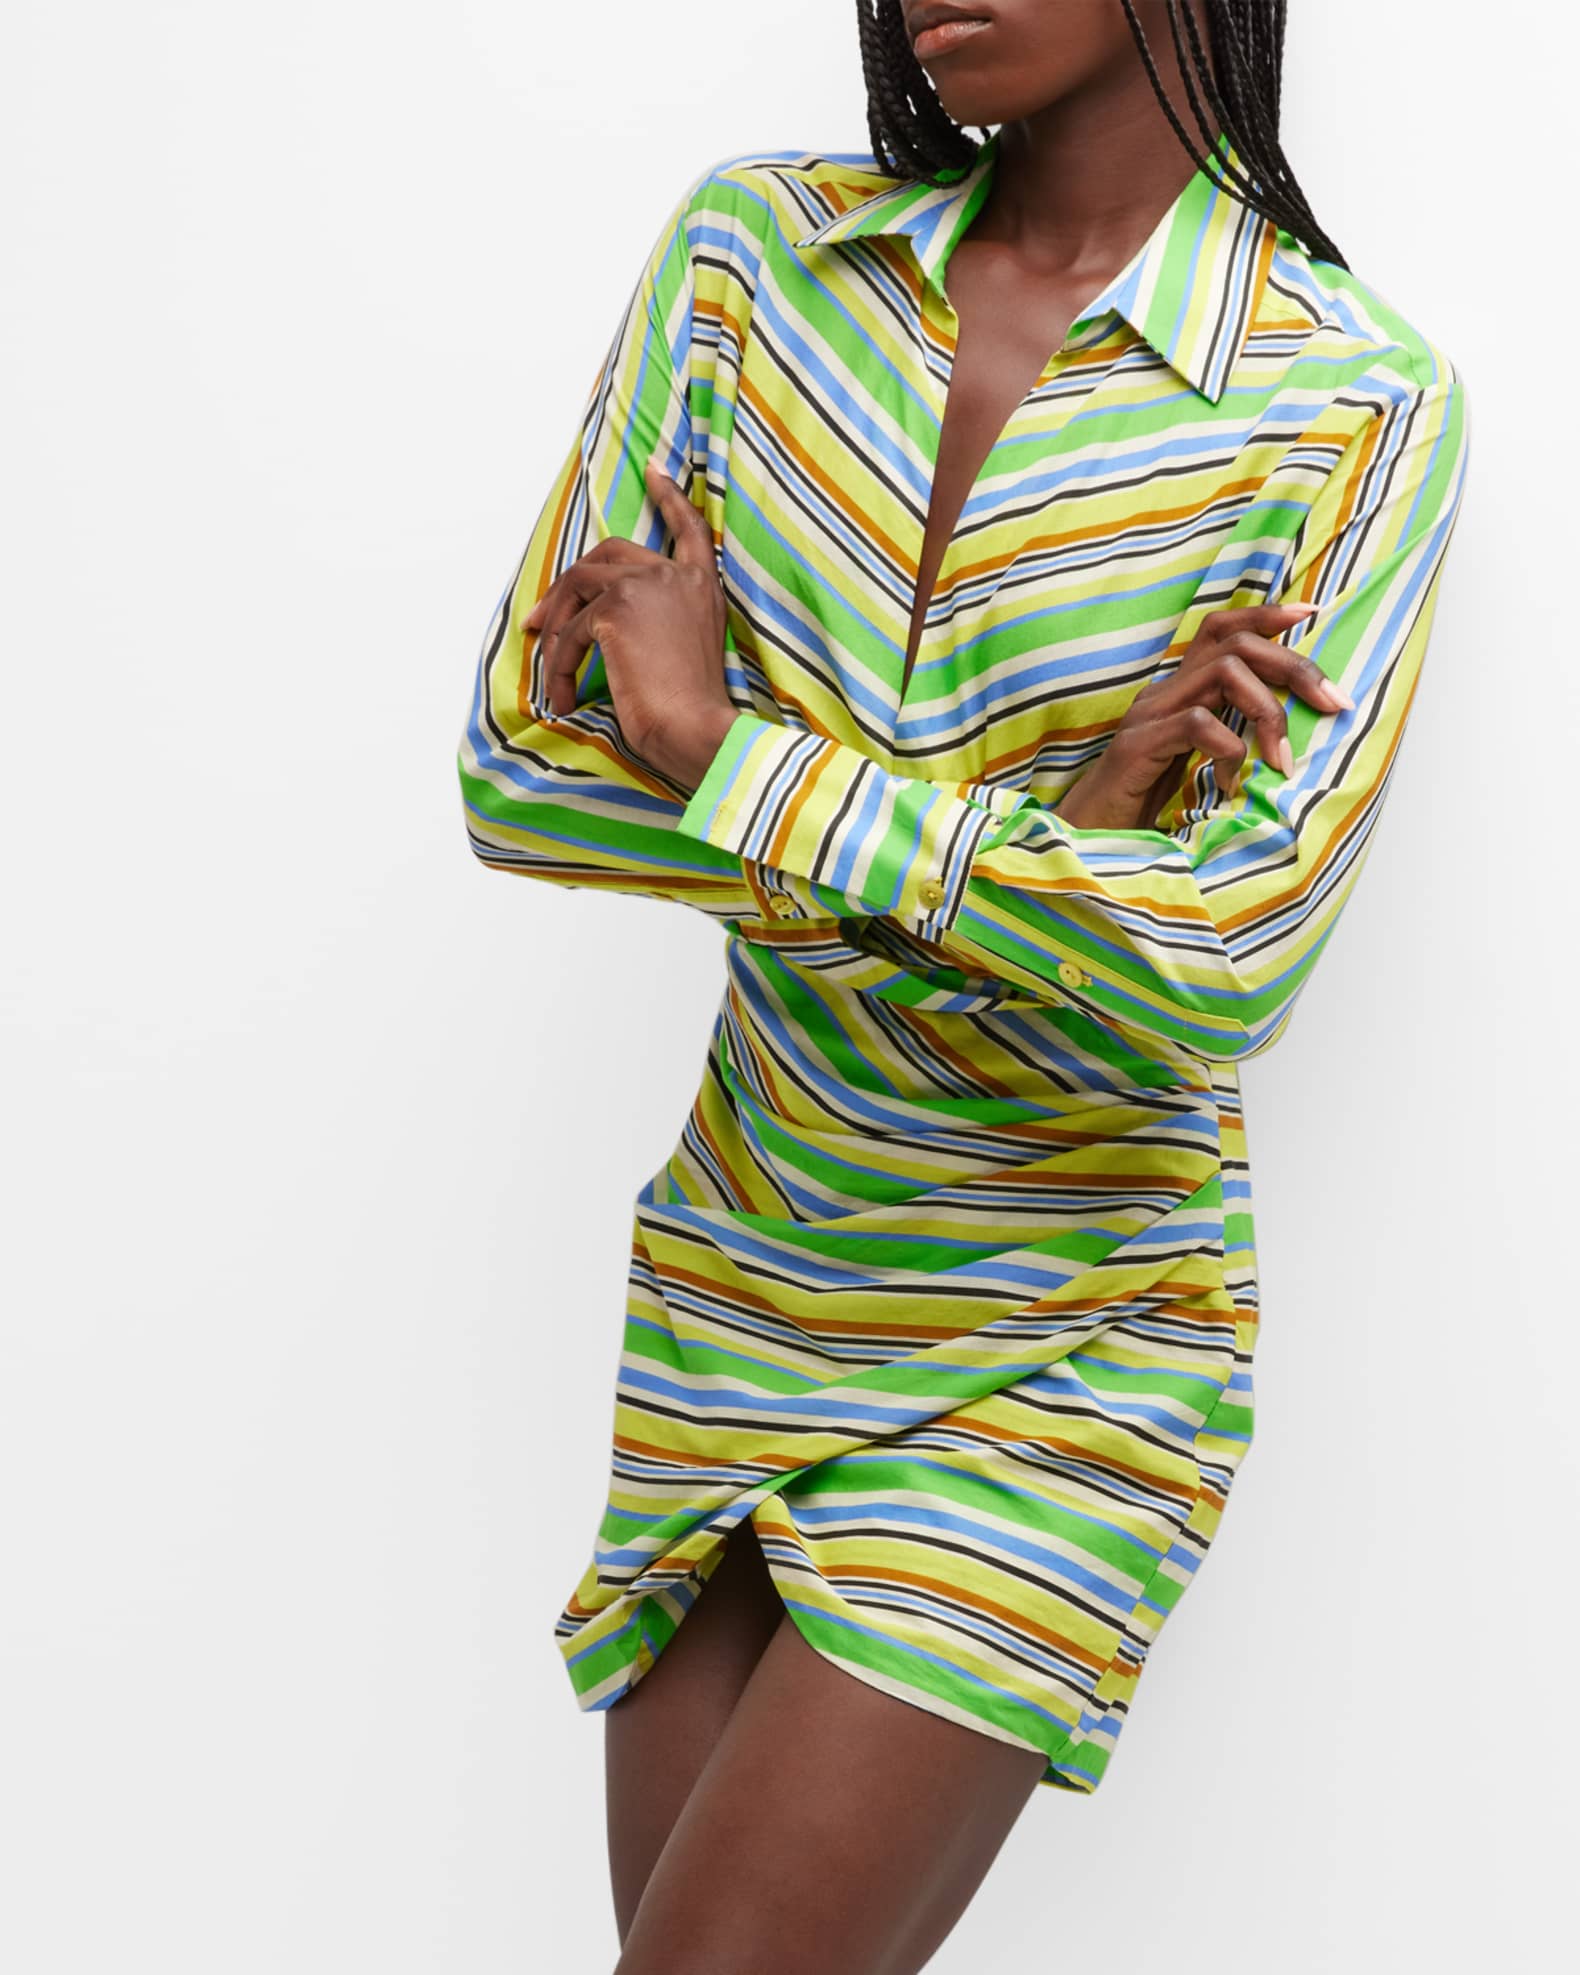 Le Superbe Future Looks Bright Striped Wrap Dress | Neiman Marcus